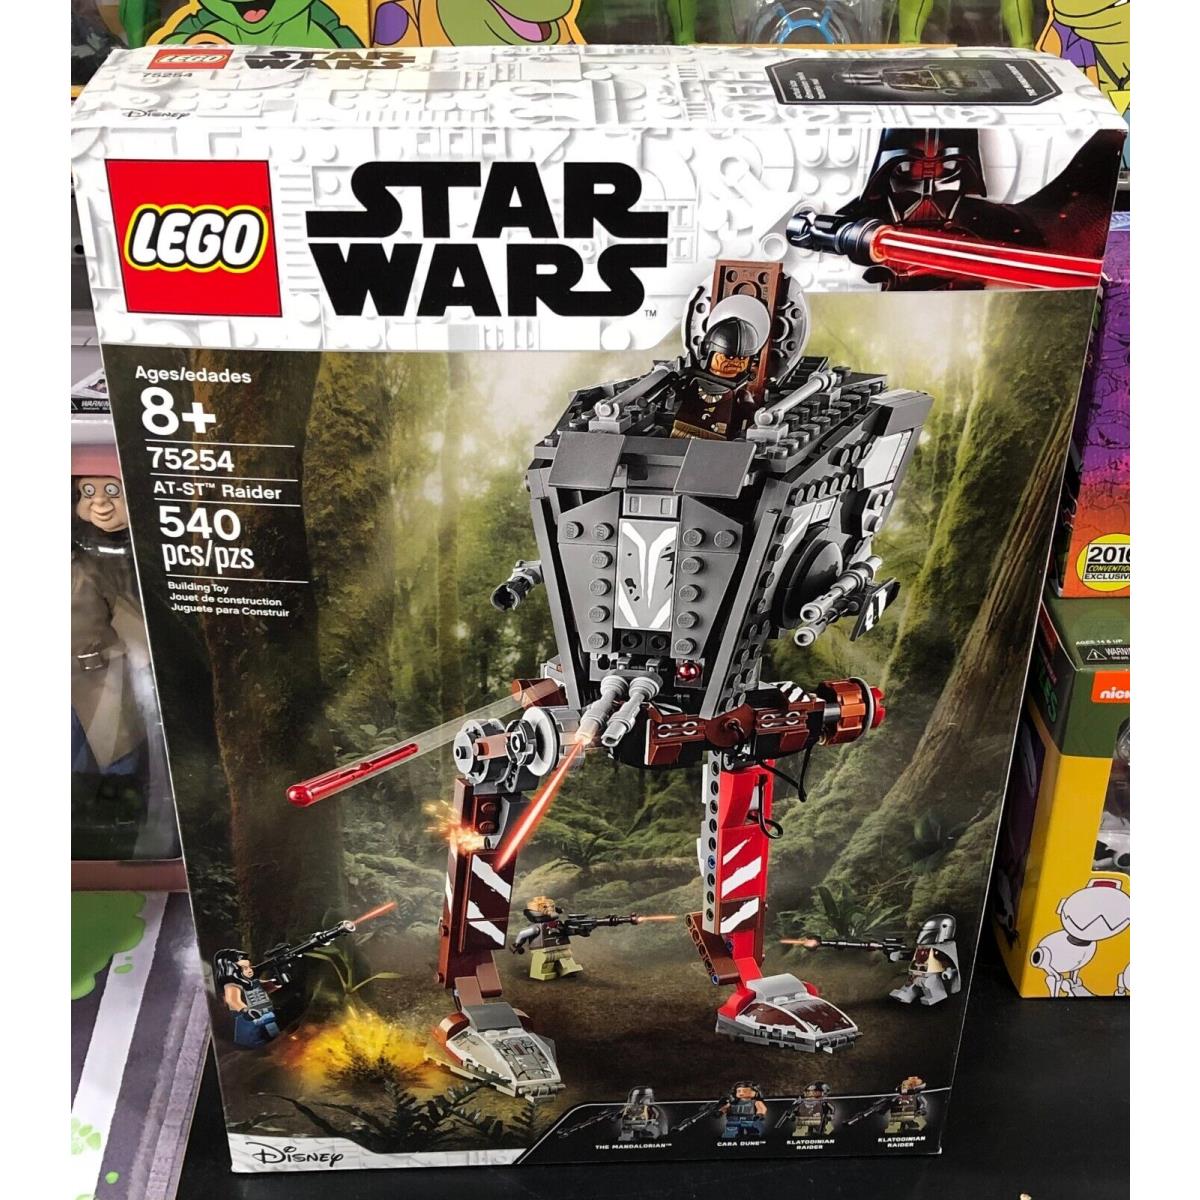 Lego 75254 Star Wars At-st Raider - The Mandalorian